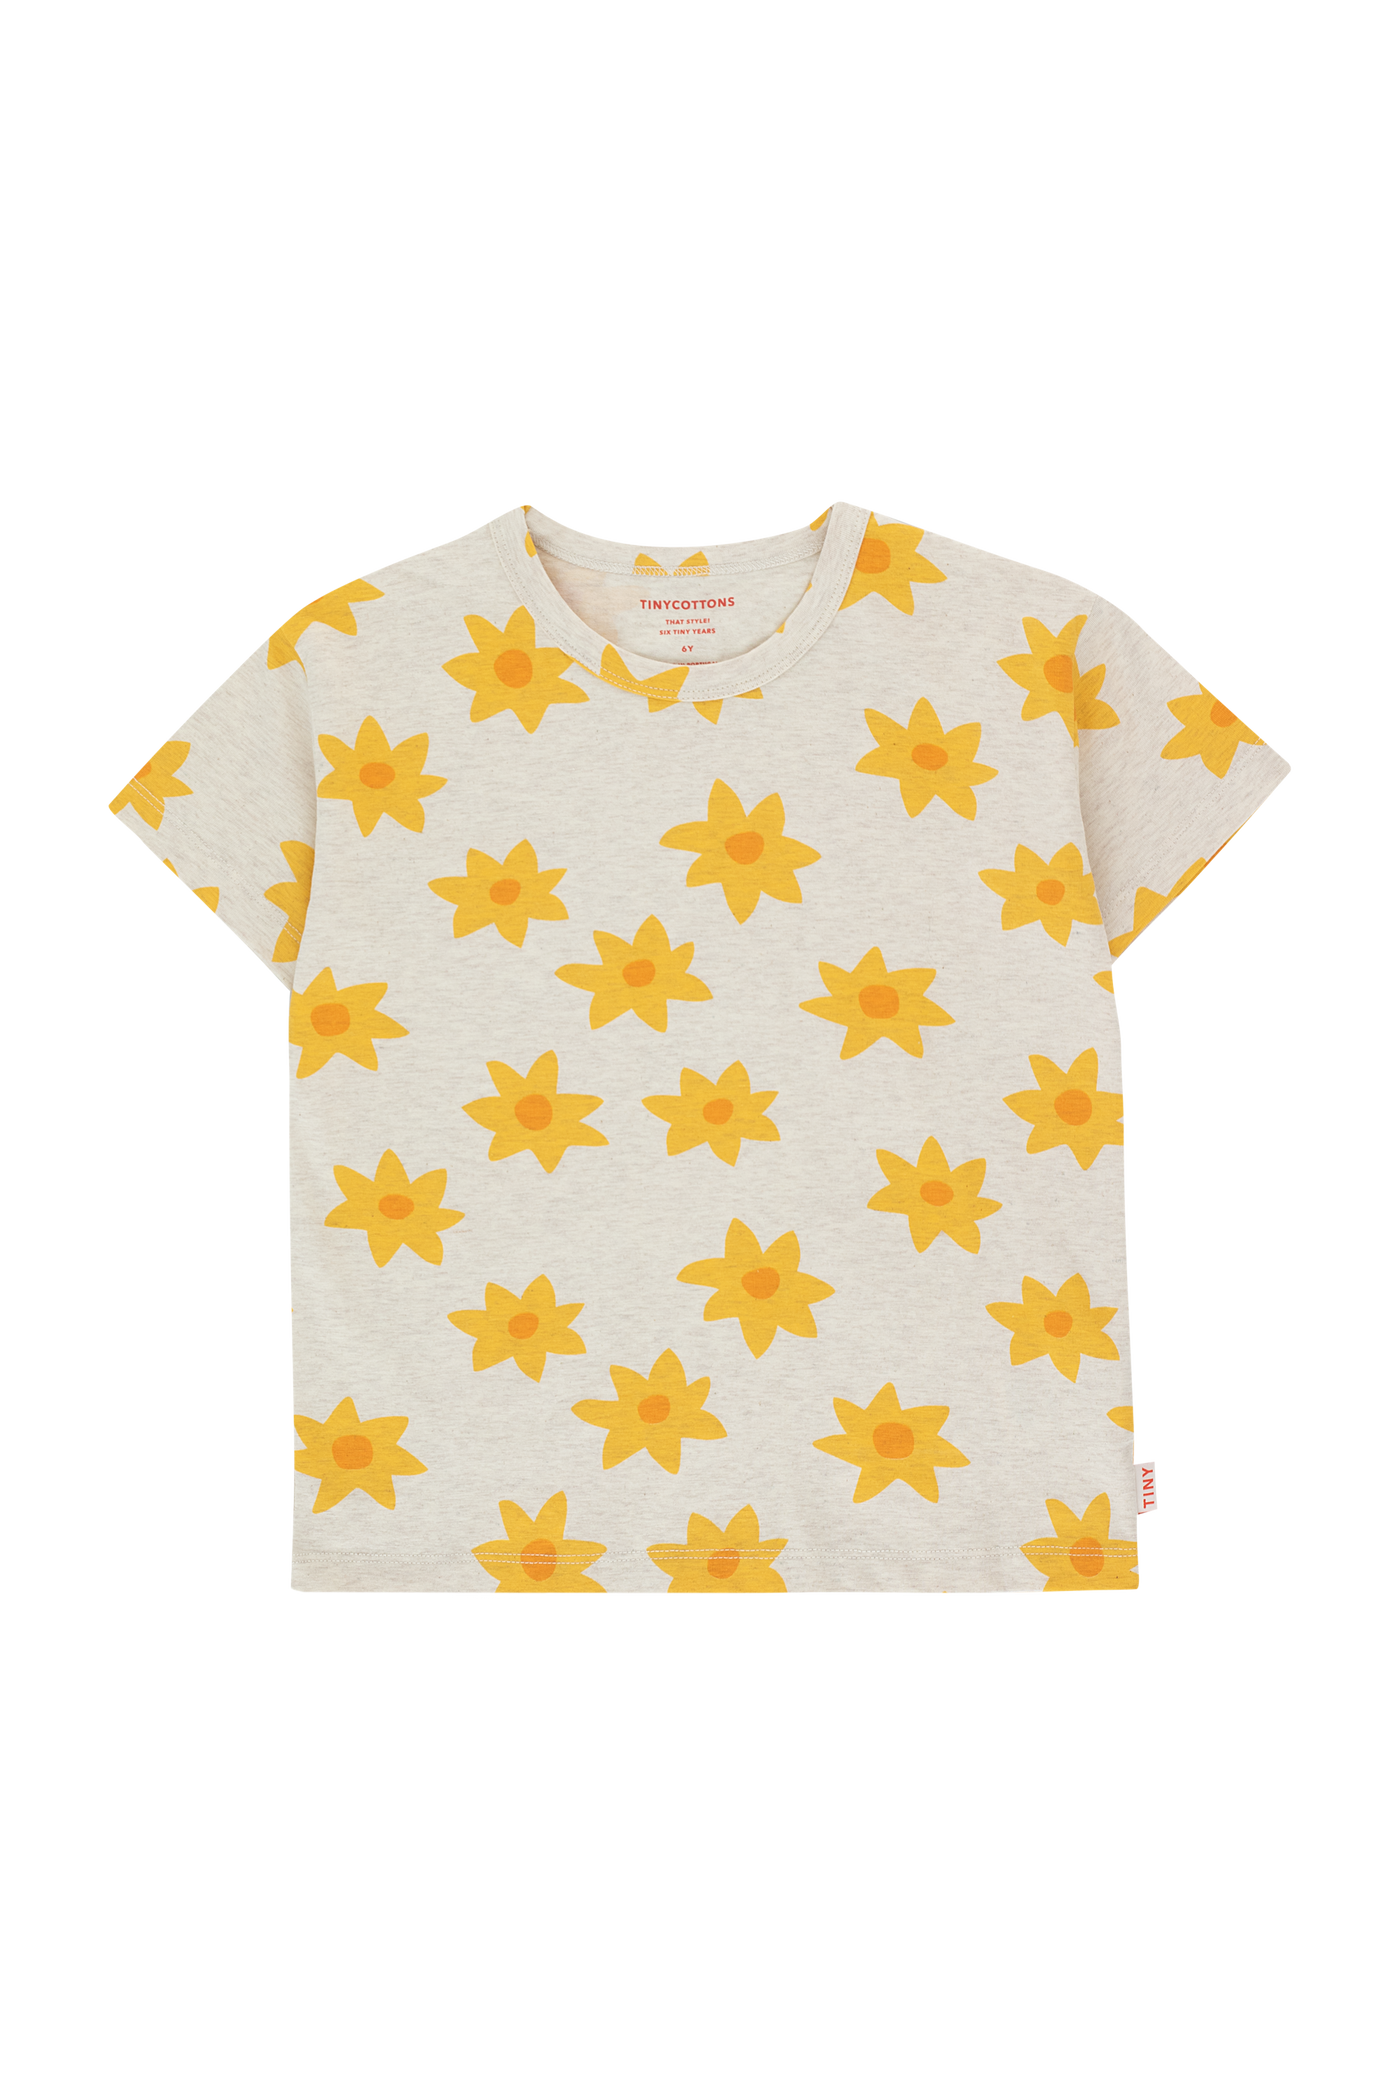 Tinycottons camiseta starfruit